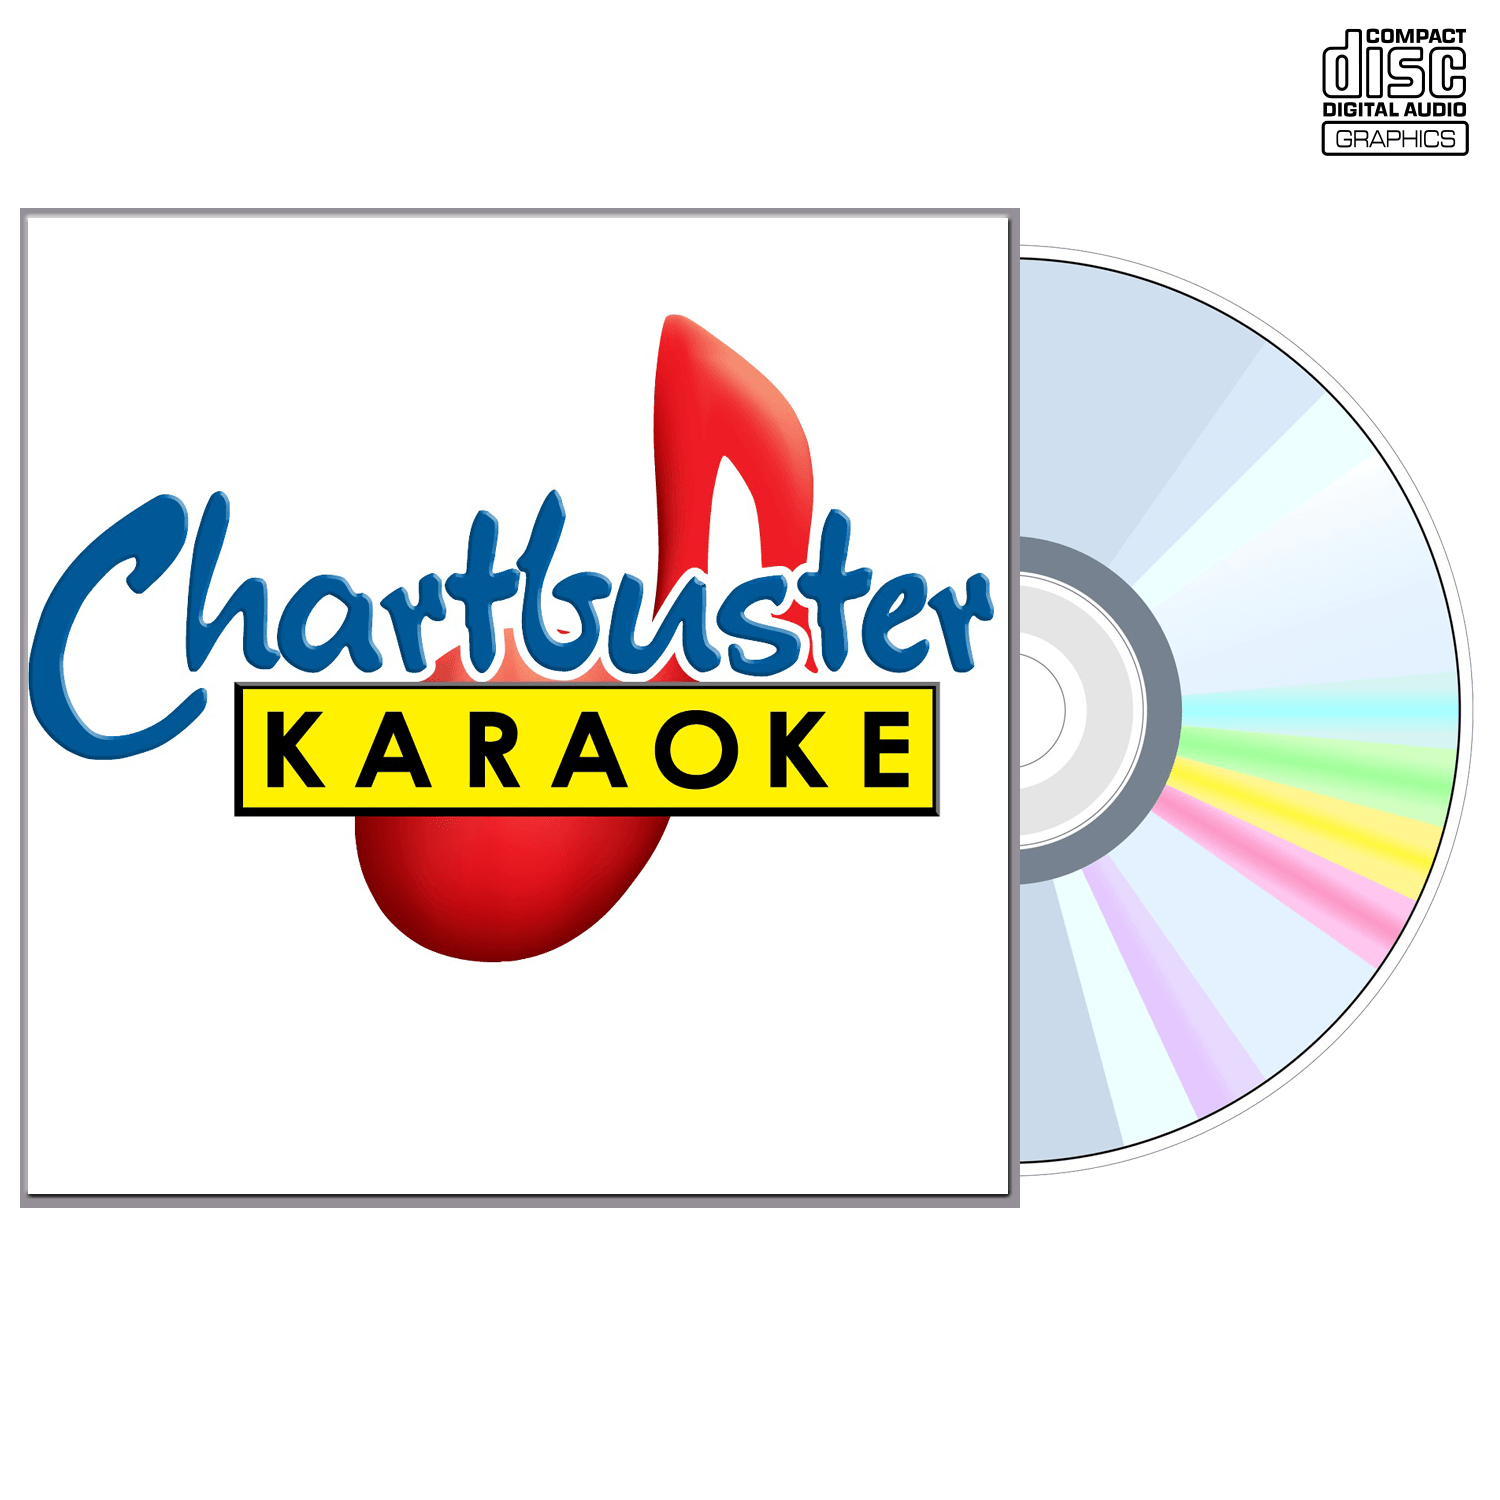 Andy Griggs - CD+G - Chartbuster Karaoke - Karaoke Home Entertainment